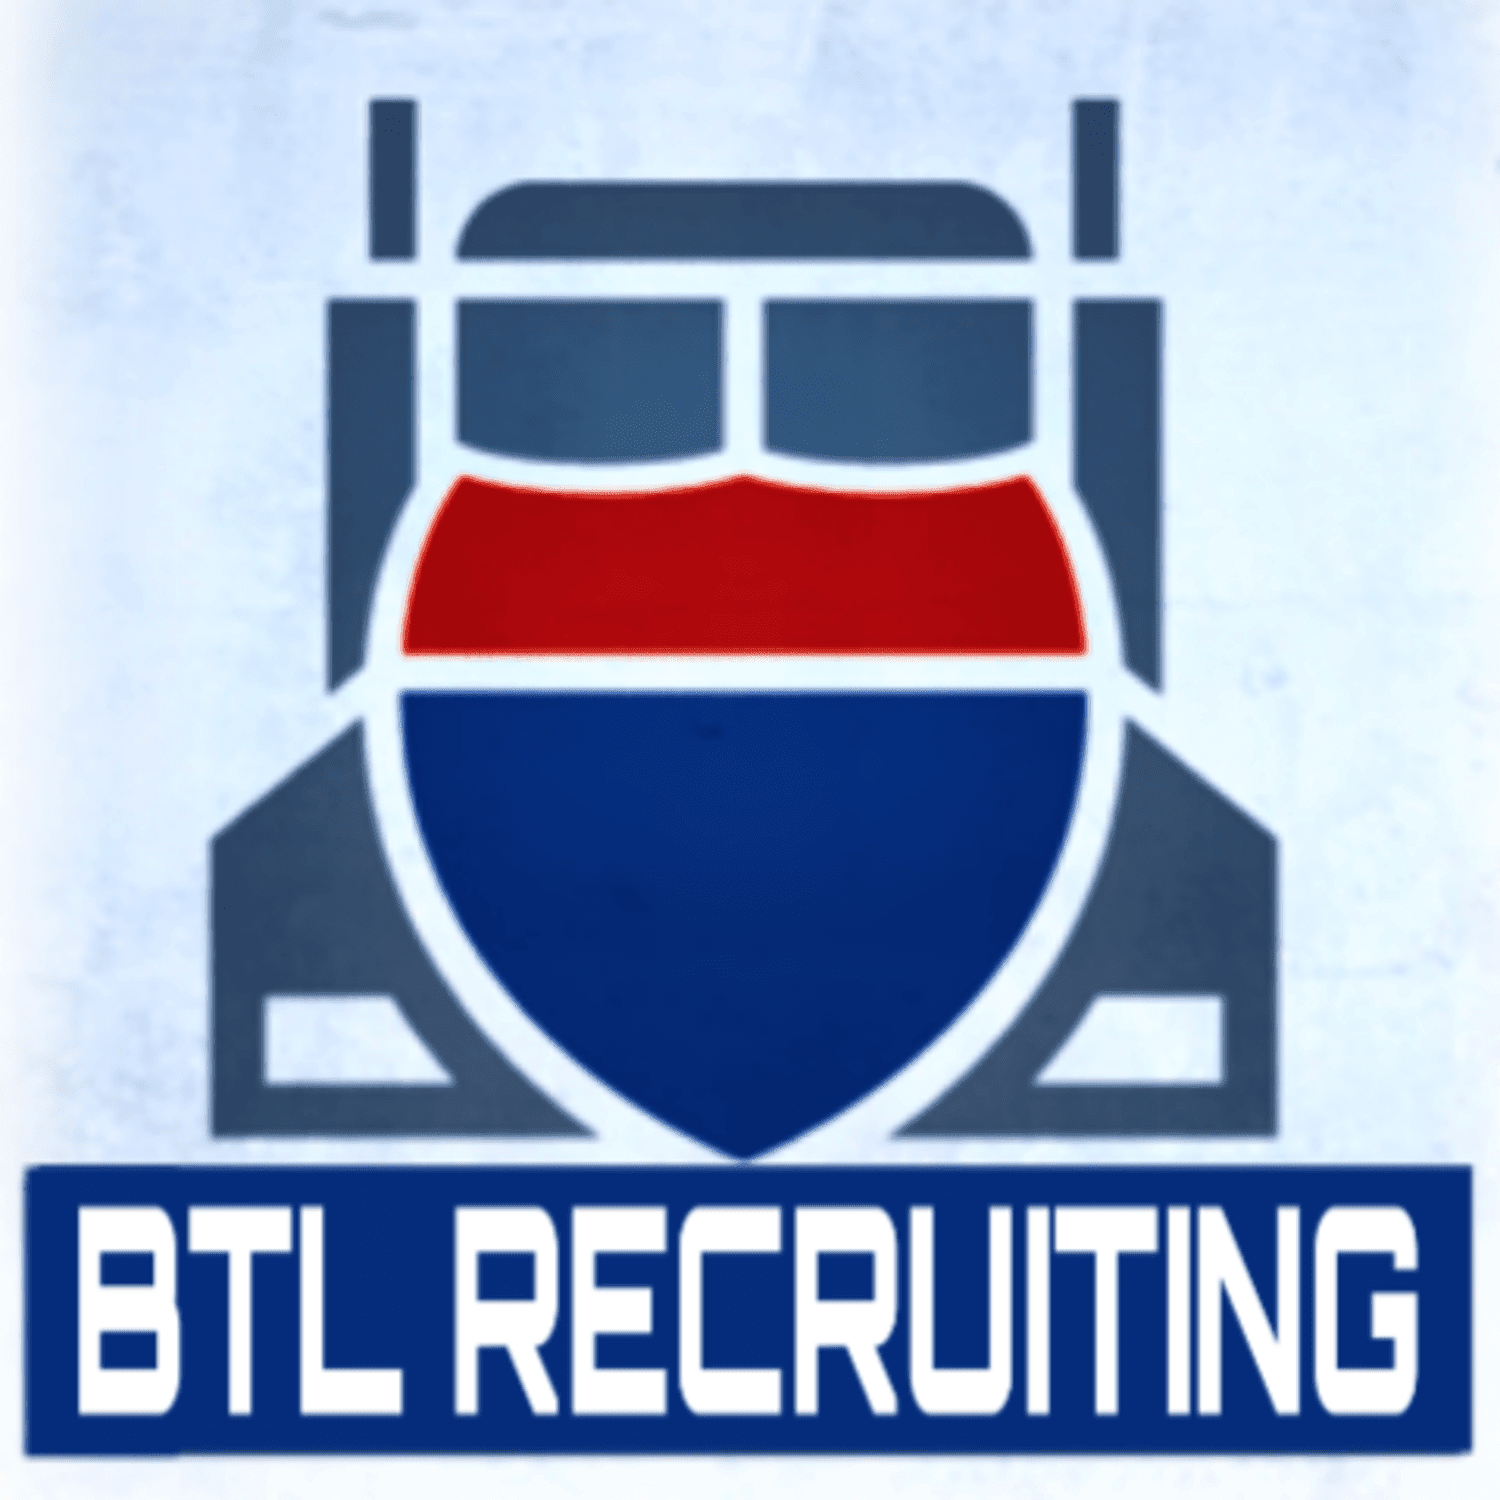 BTL Recruiting